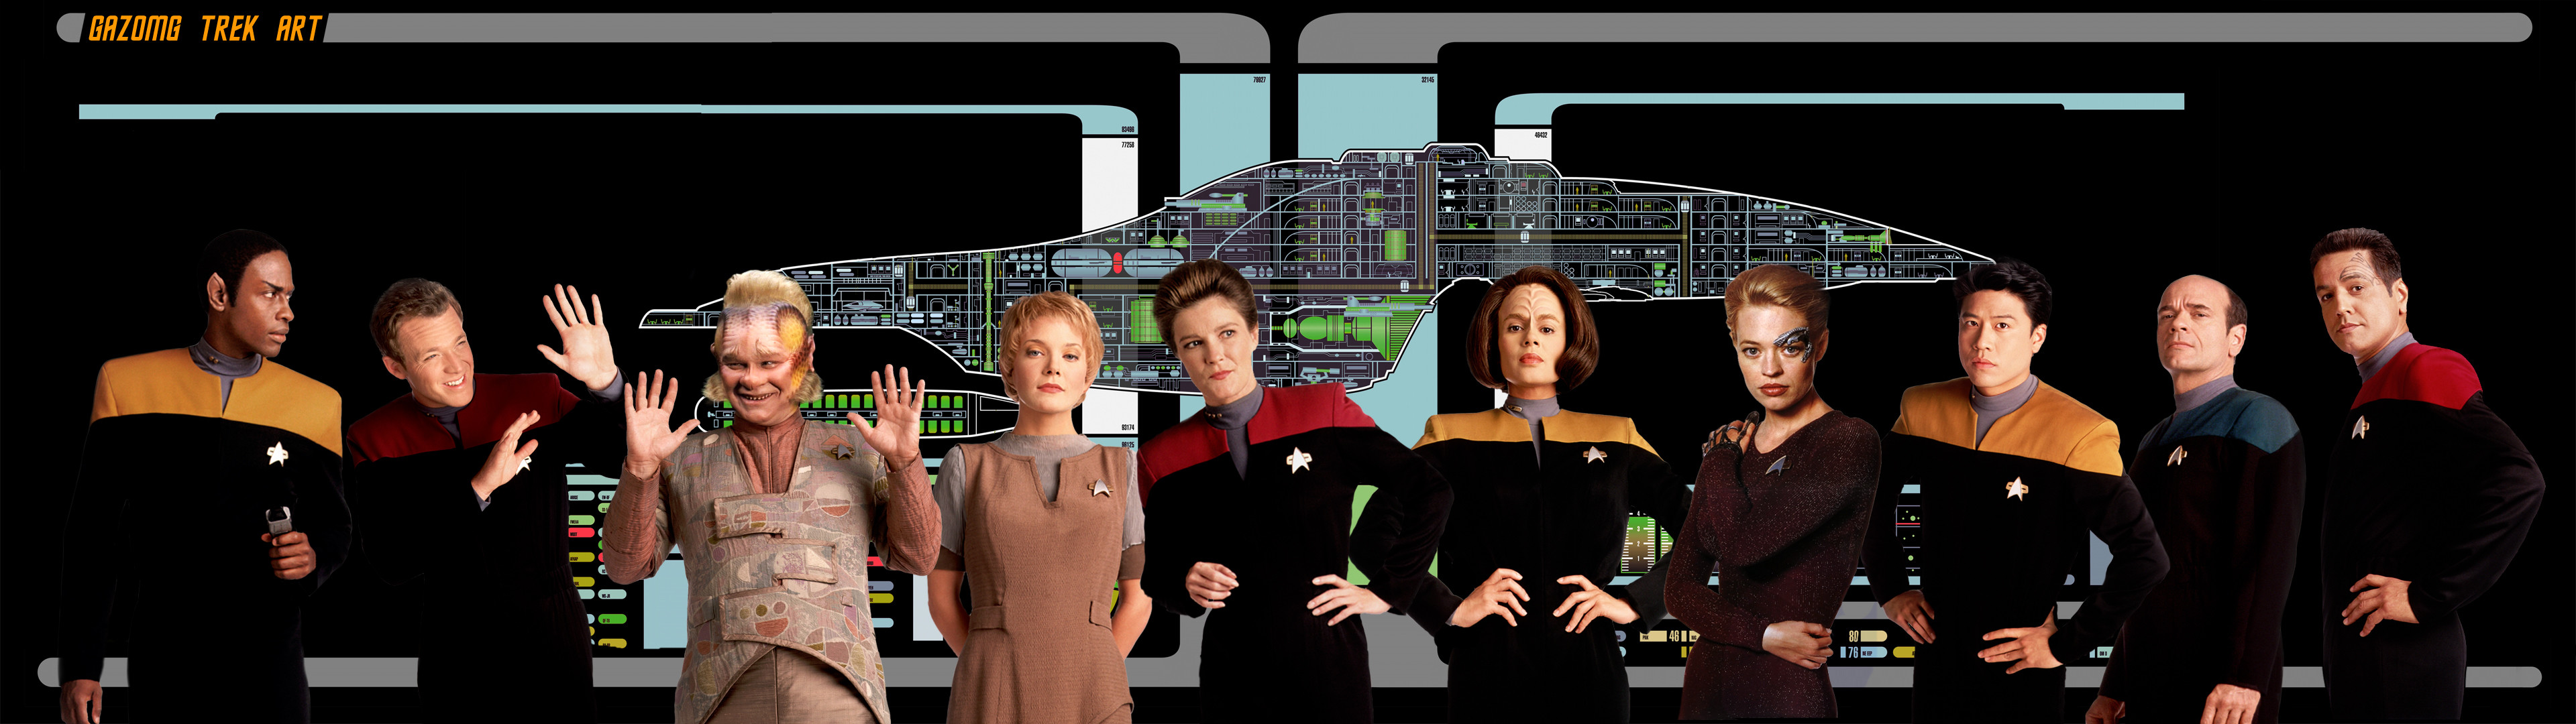 3840x1080 ... Extra Widescreen Star Trek Voyager Wallpaper by gazomg